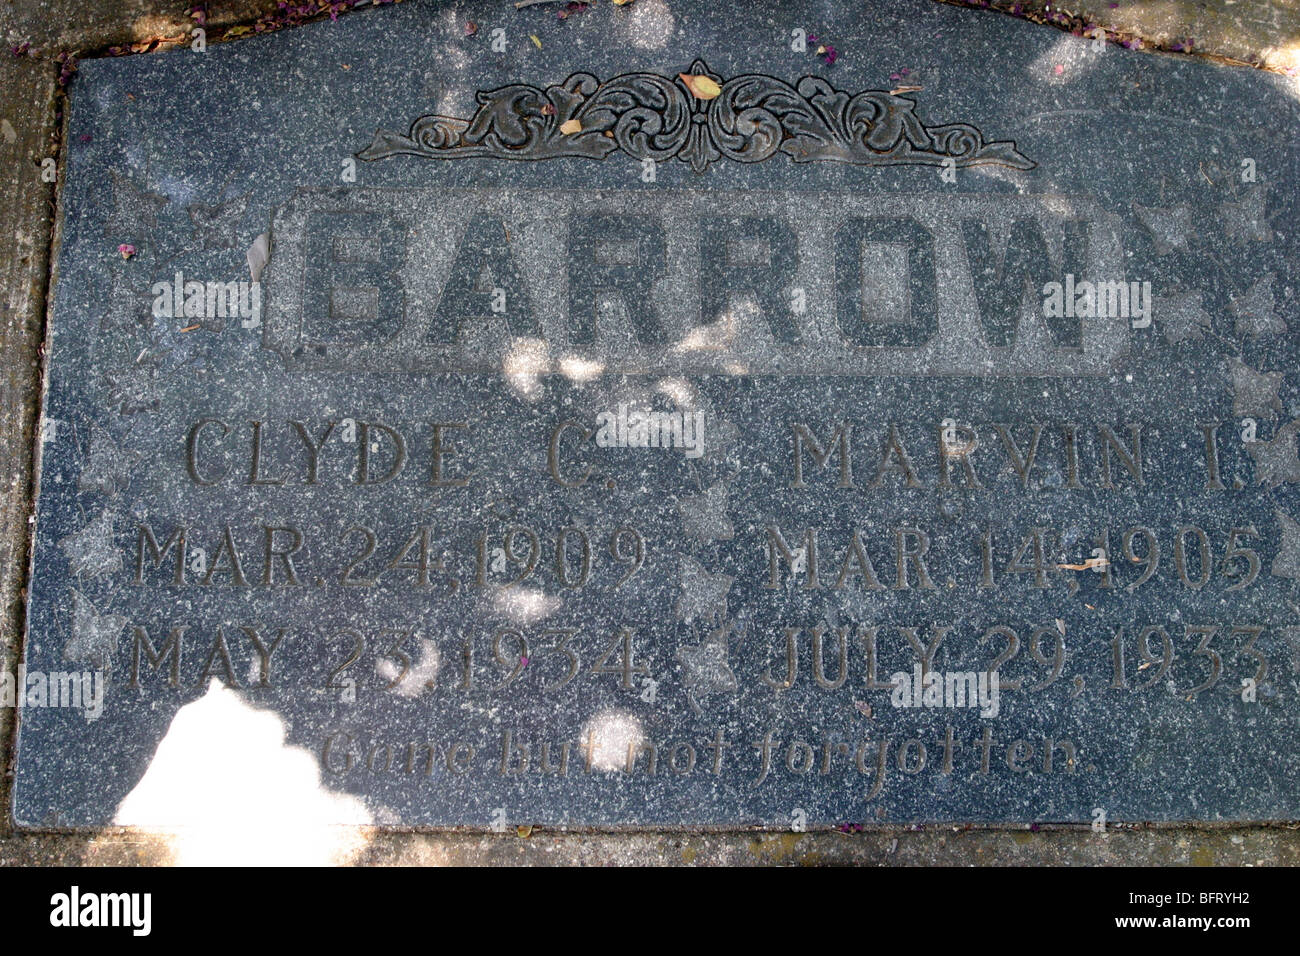 La tombe de Clyde Barrow, cimetière de Western Heights à Dallas, Texas, USA Banque D'Images